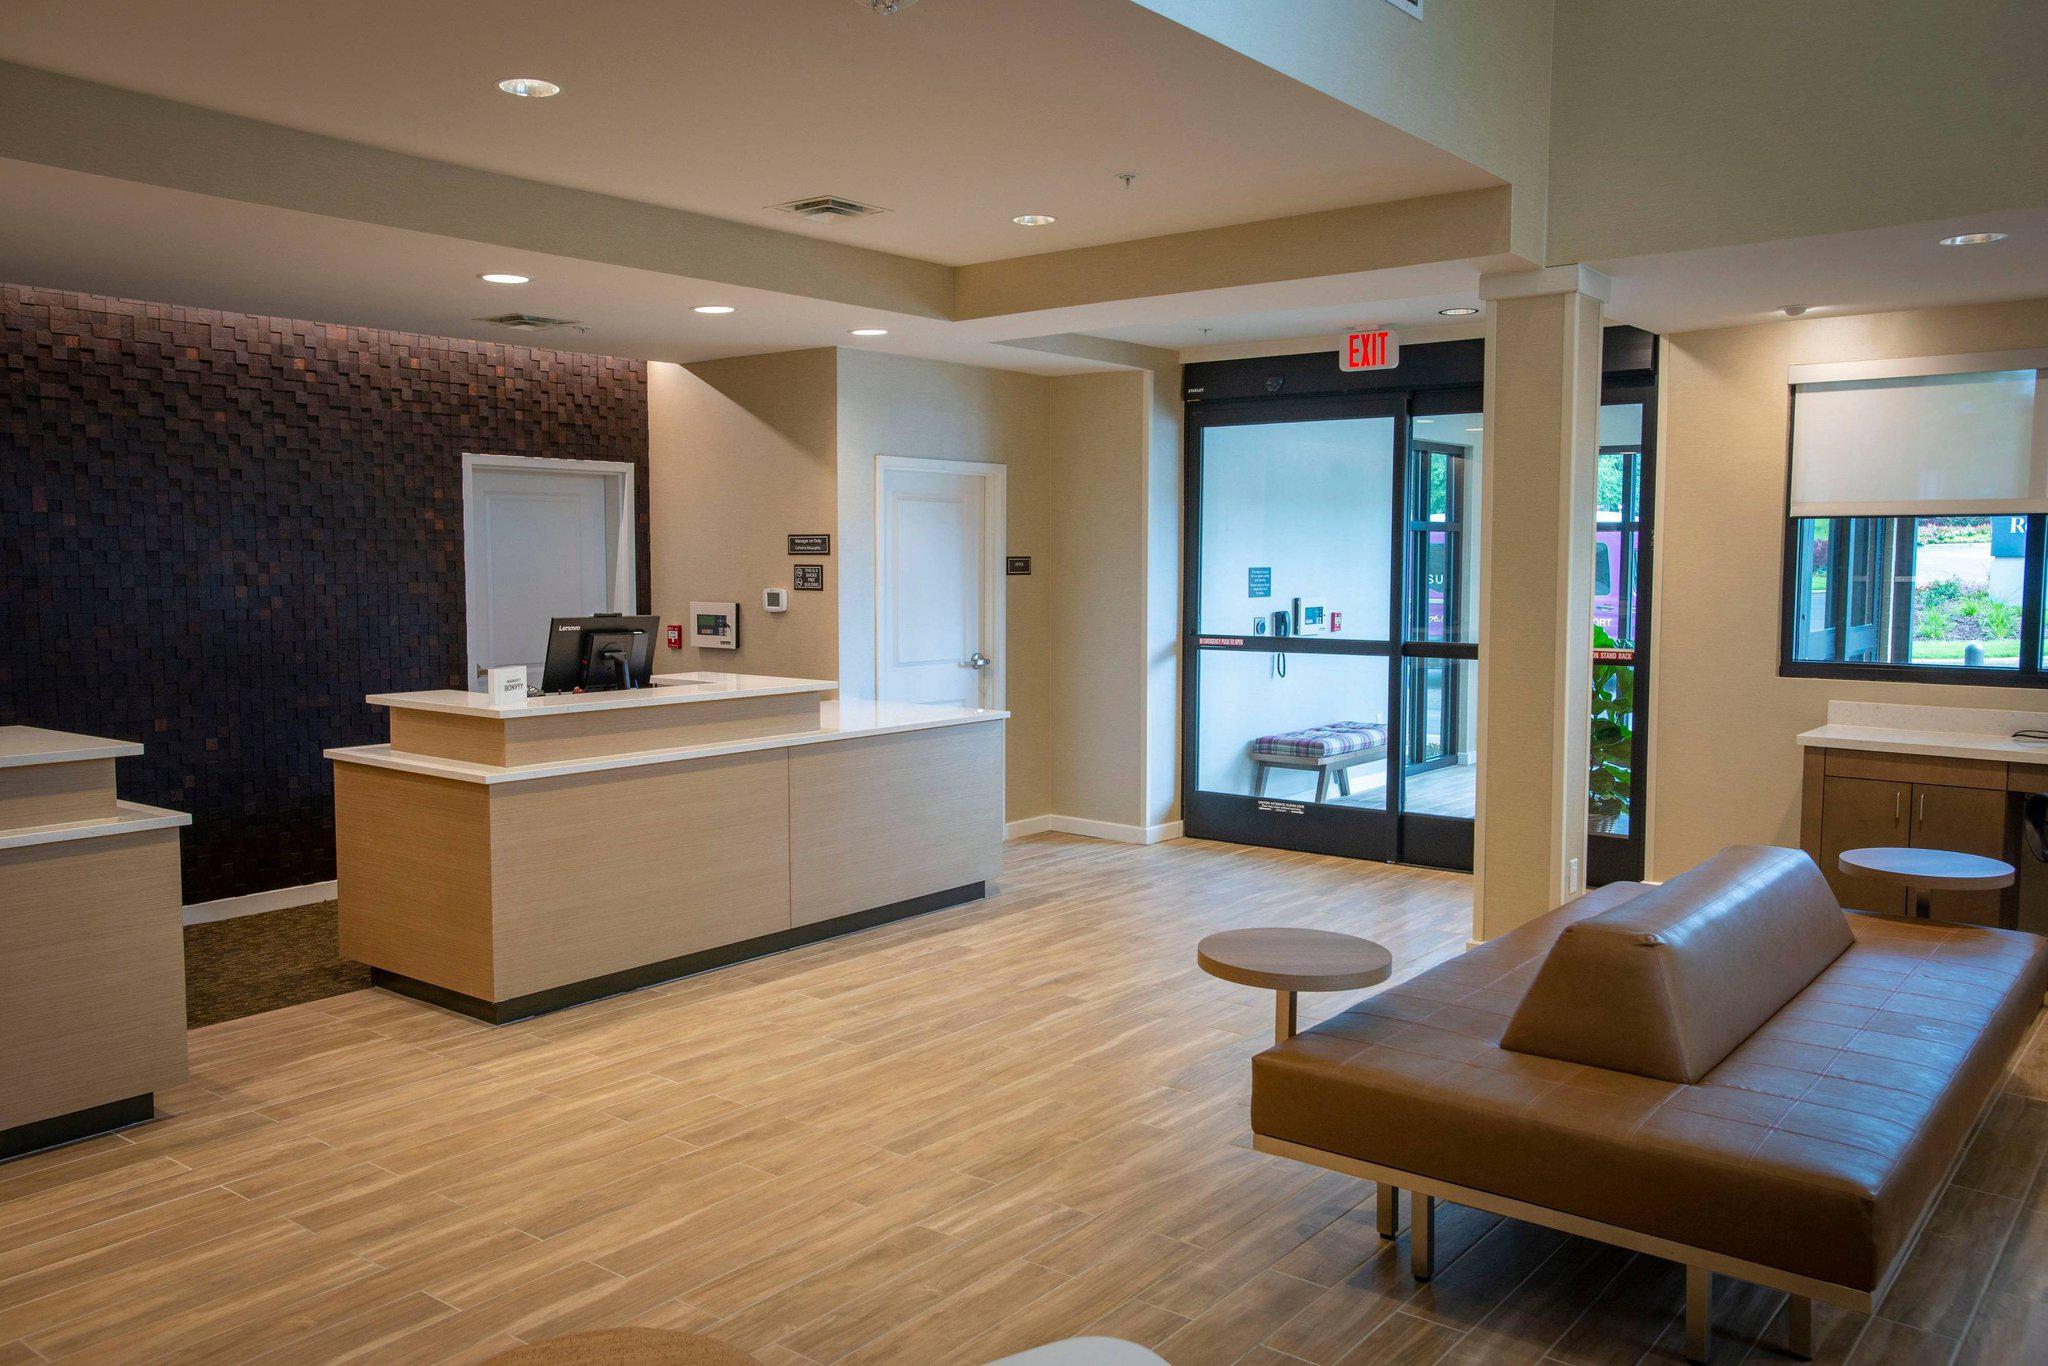 Residence Inn by Marriott Pensacola Airport/Medical Center Photo